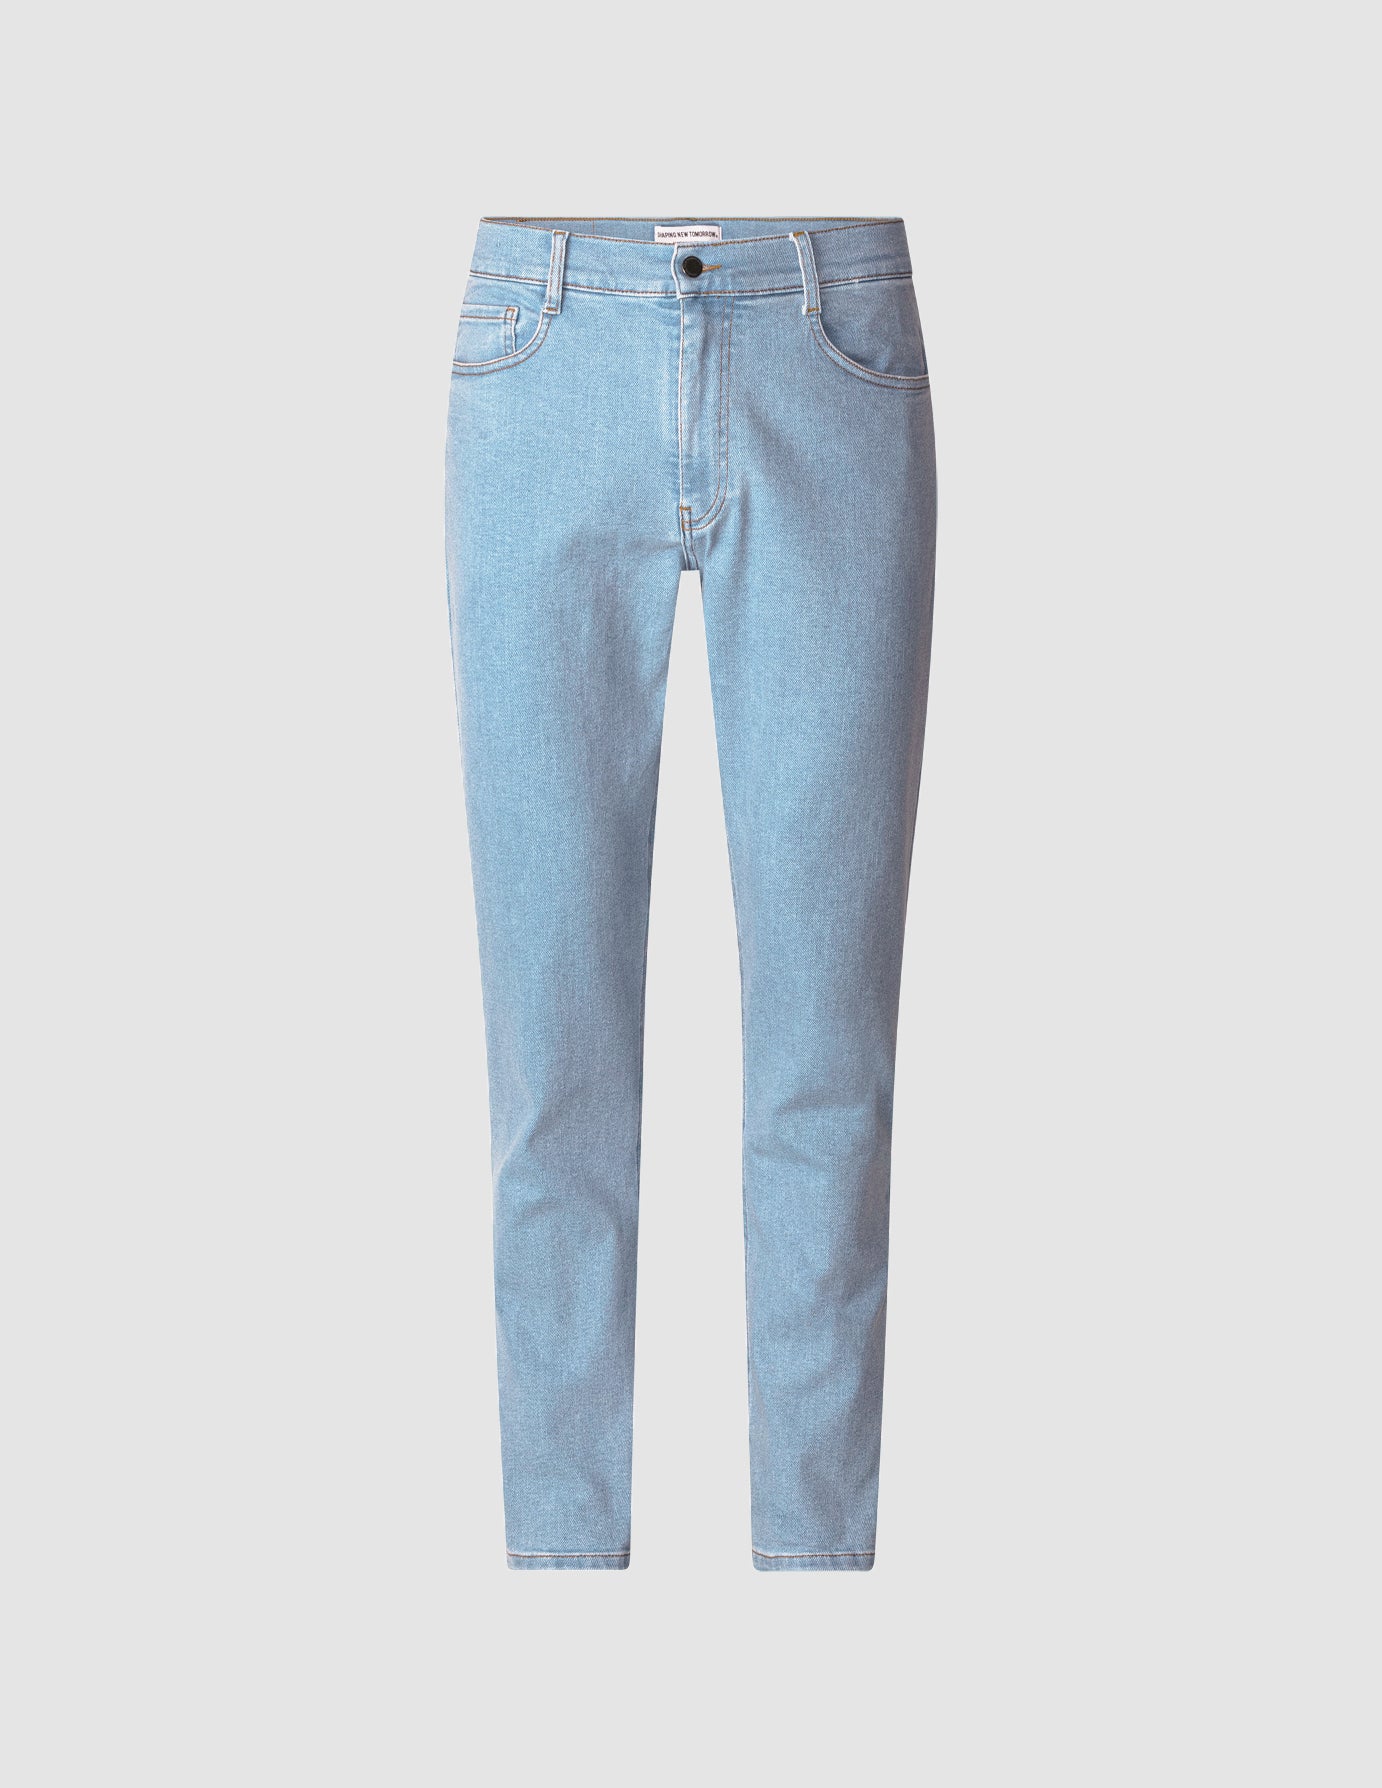 Details more than 236 bright denim jeans best